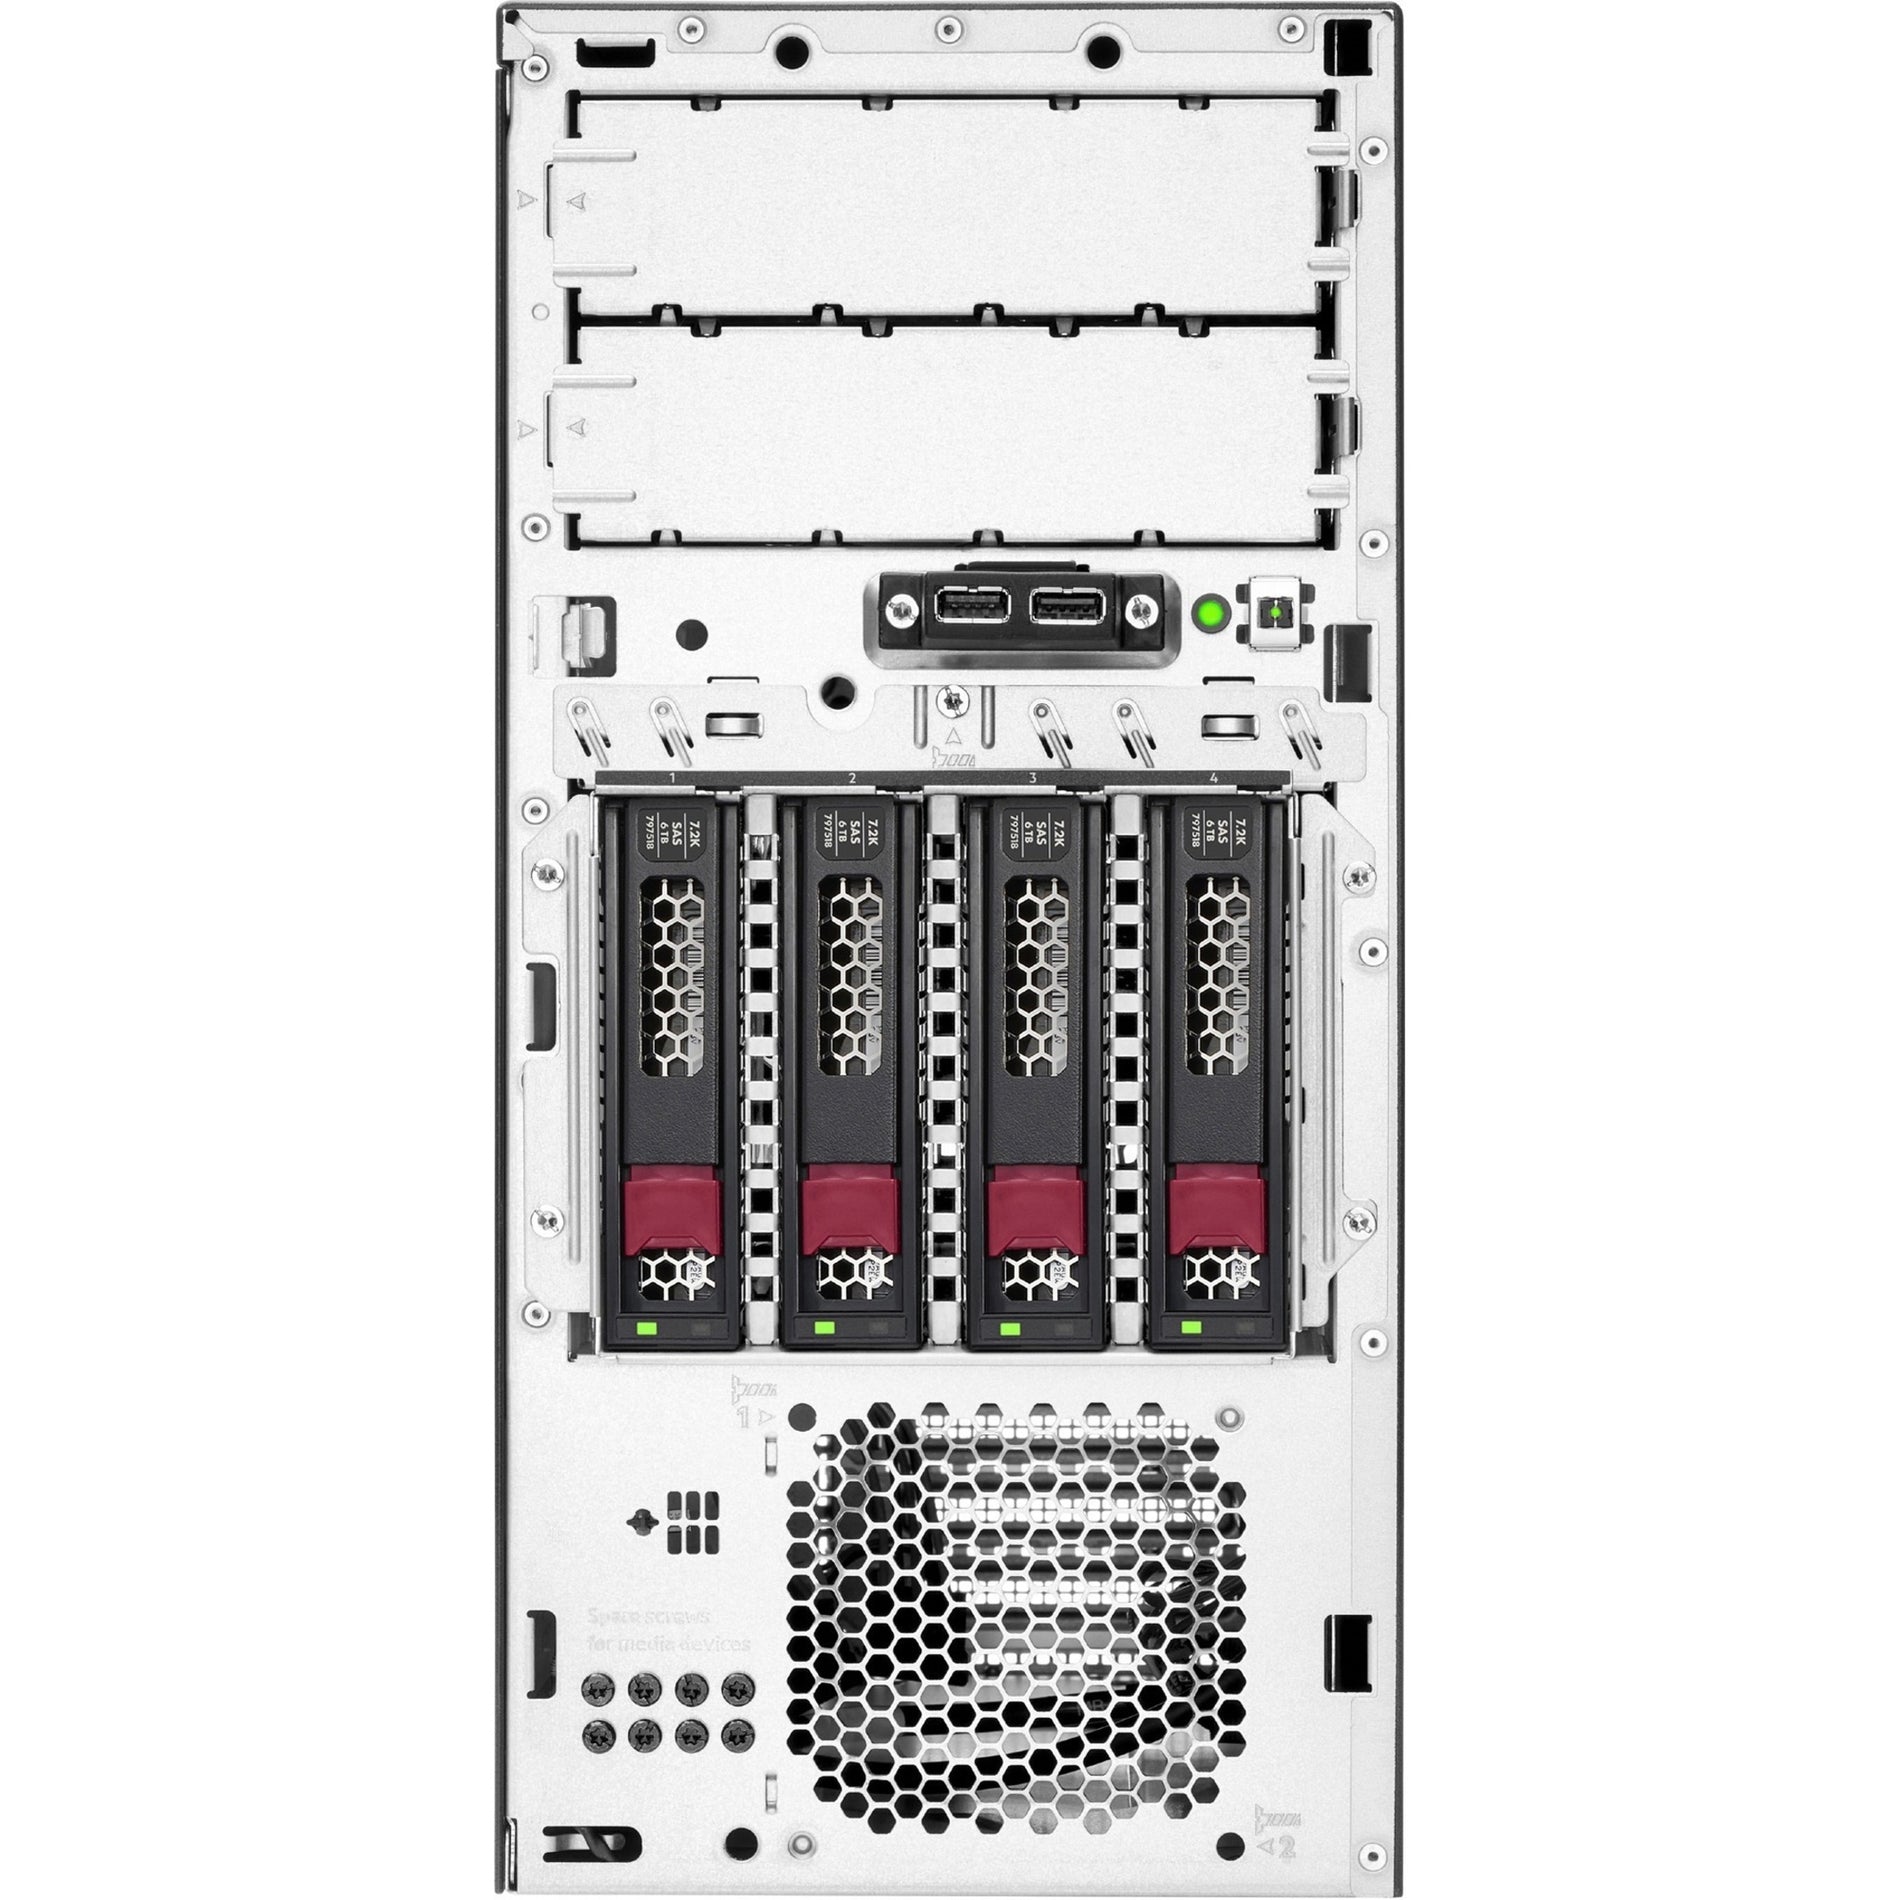 HPE P44720-001 ProLiant ML30 G10 Plus 4U Tower Server Intel Xeon E-2314 2.80 GHz 16 GB RAM HP ProLiant Serveur Tour ML30 G10 Plus 4U P44720-001 Intel Xeon E-2314 2.80 GHz 16 Go RAM